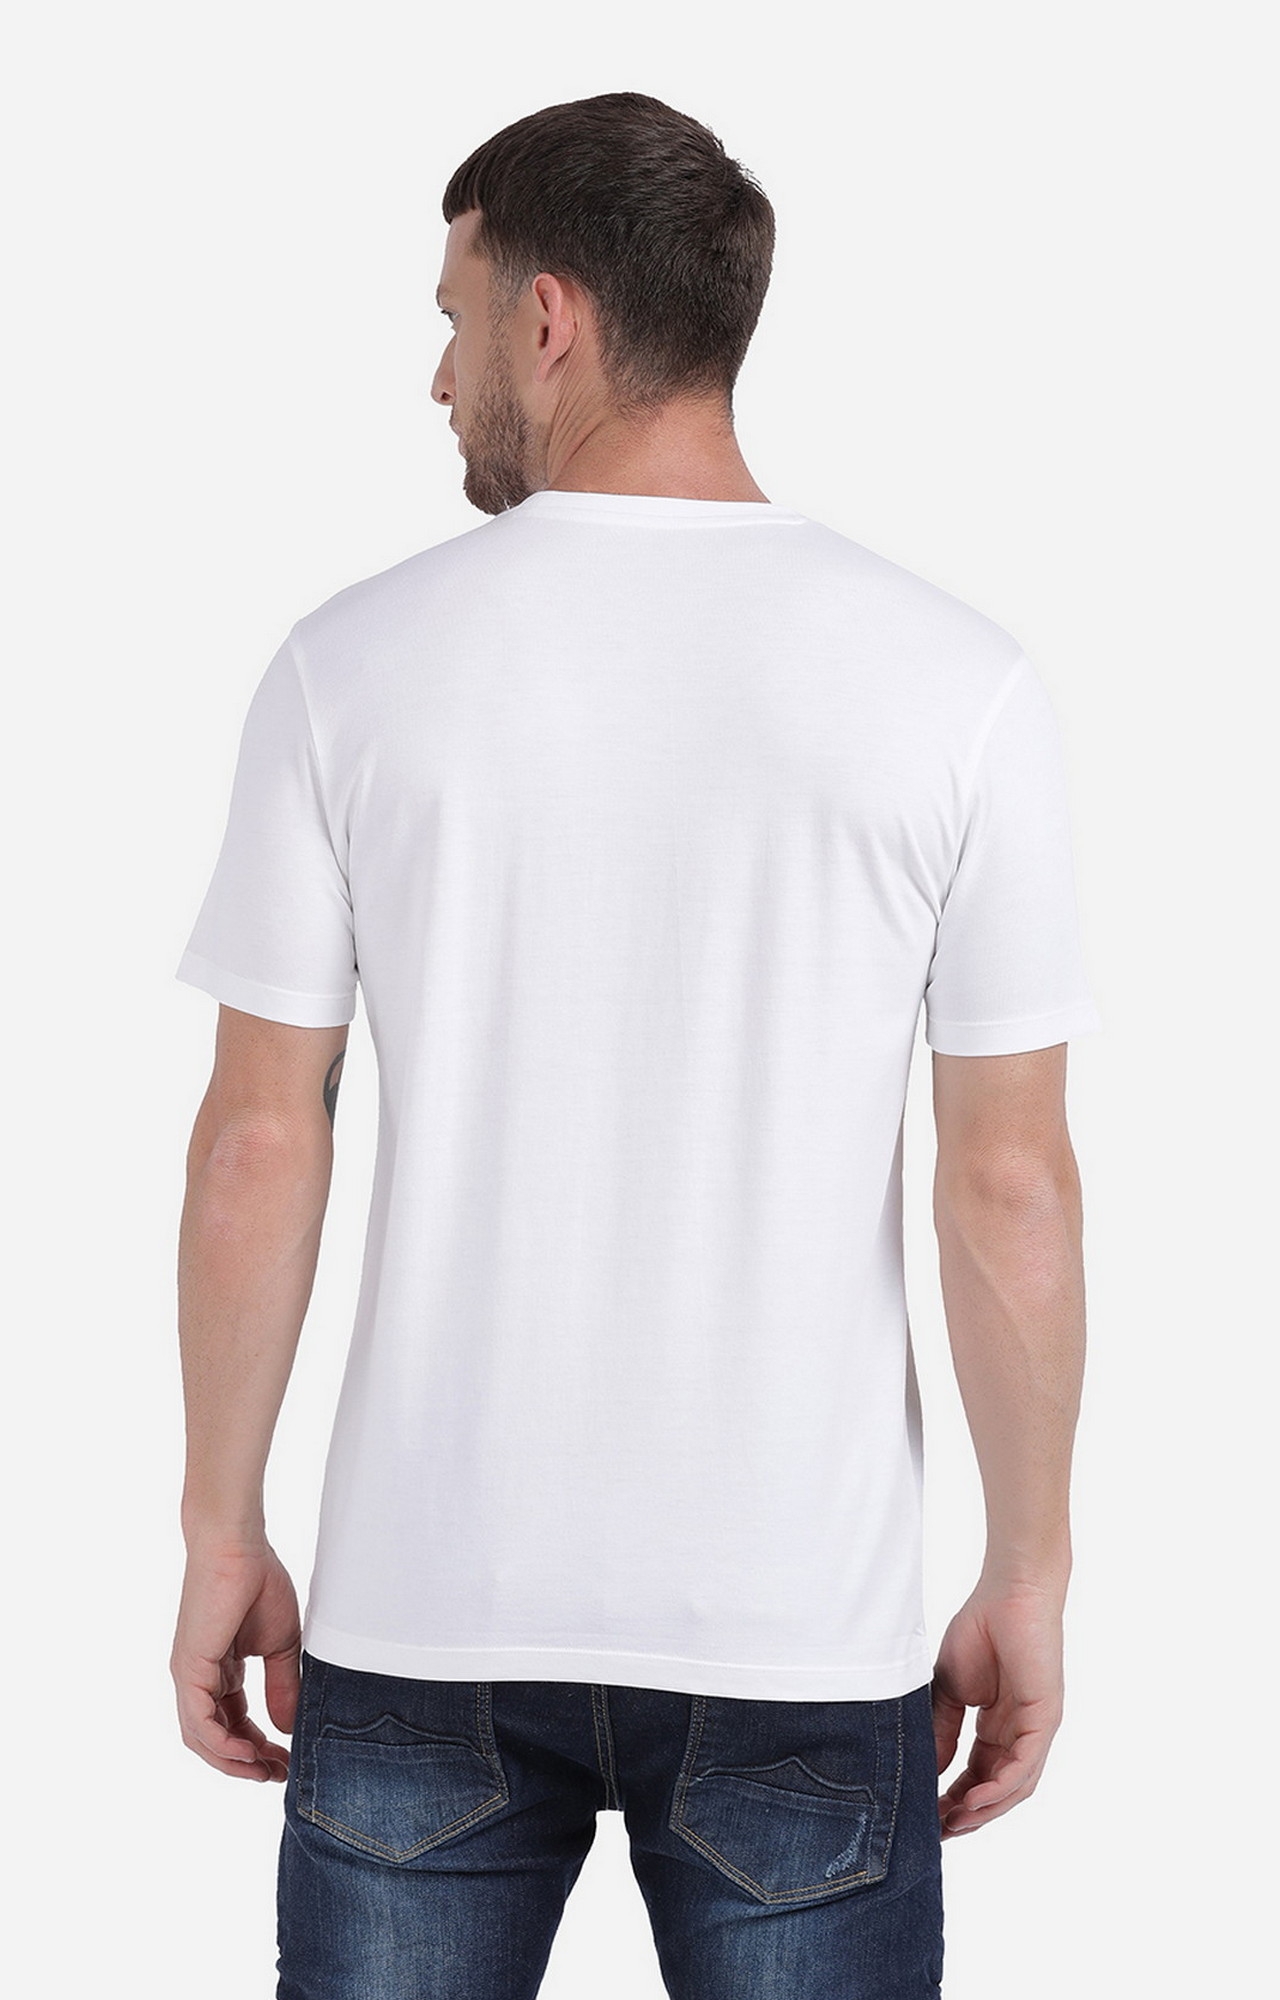 883 Police | Men's White Cotton Typographic Printed T-Shirt 5